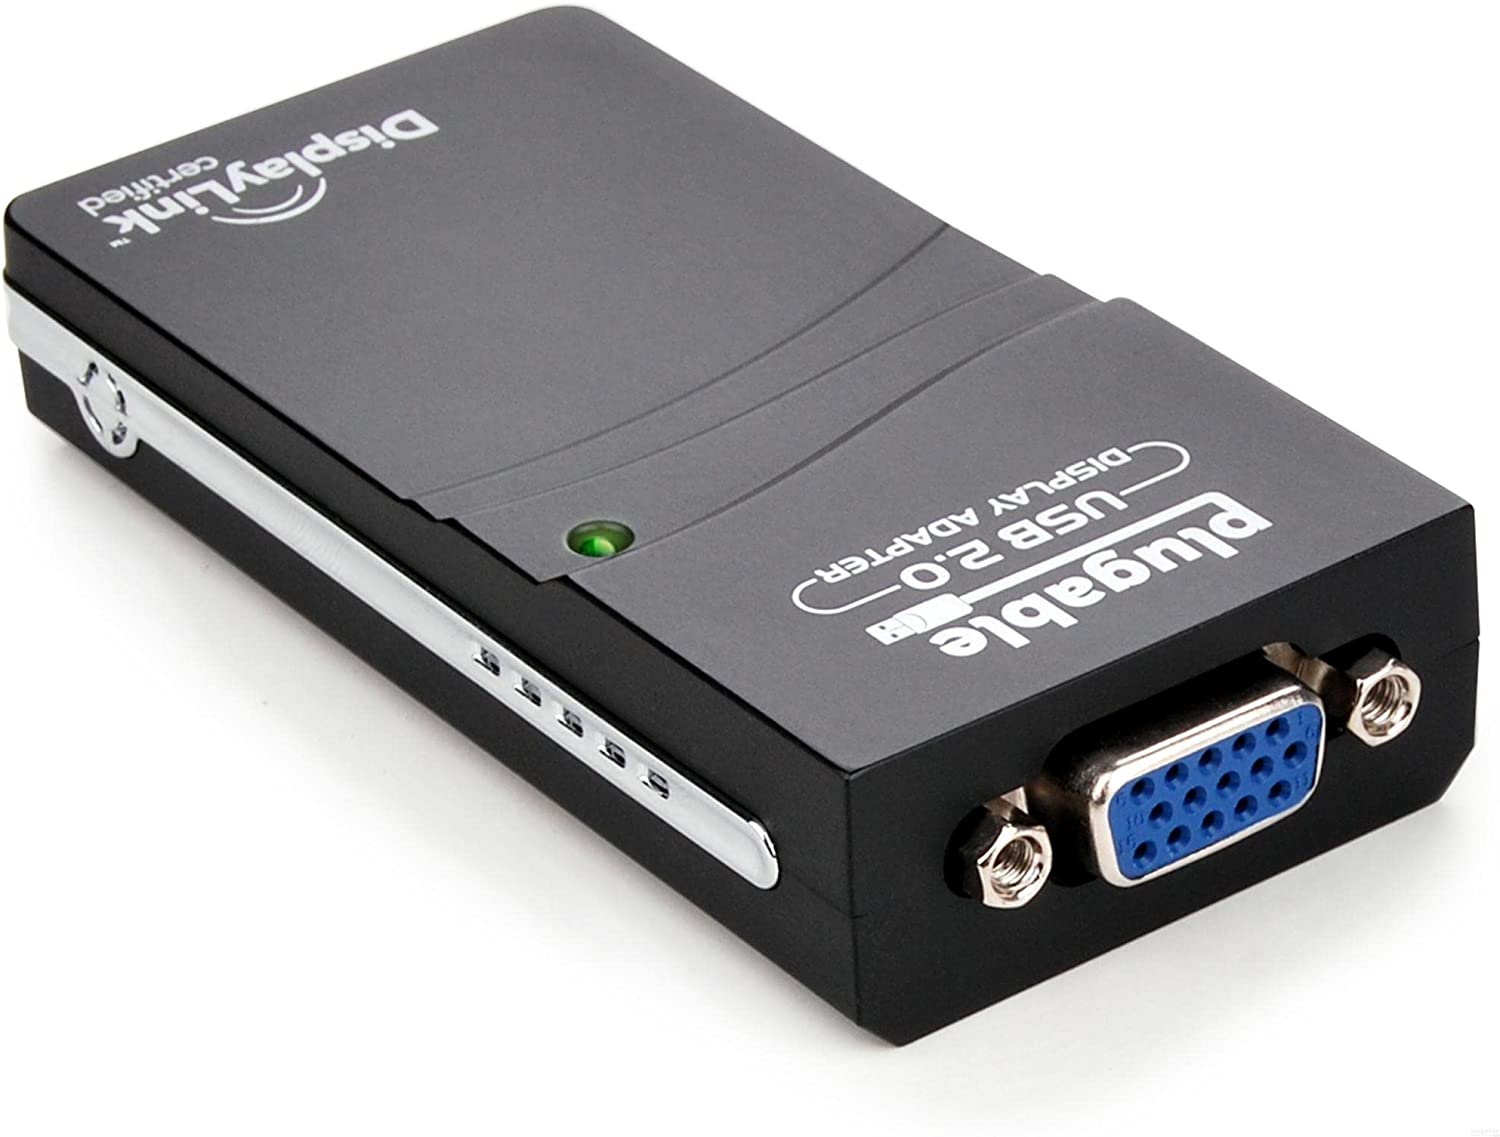 Plugable USB 2.0 to VGA Video Graphics Adapter Multiple Monitors   (LNC)